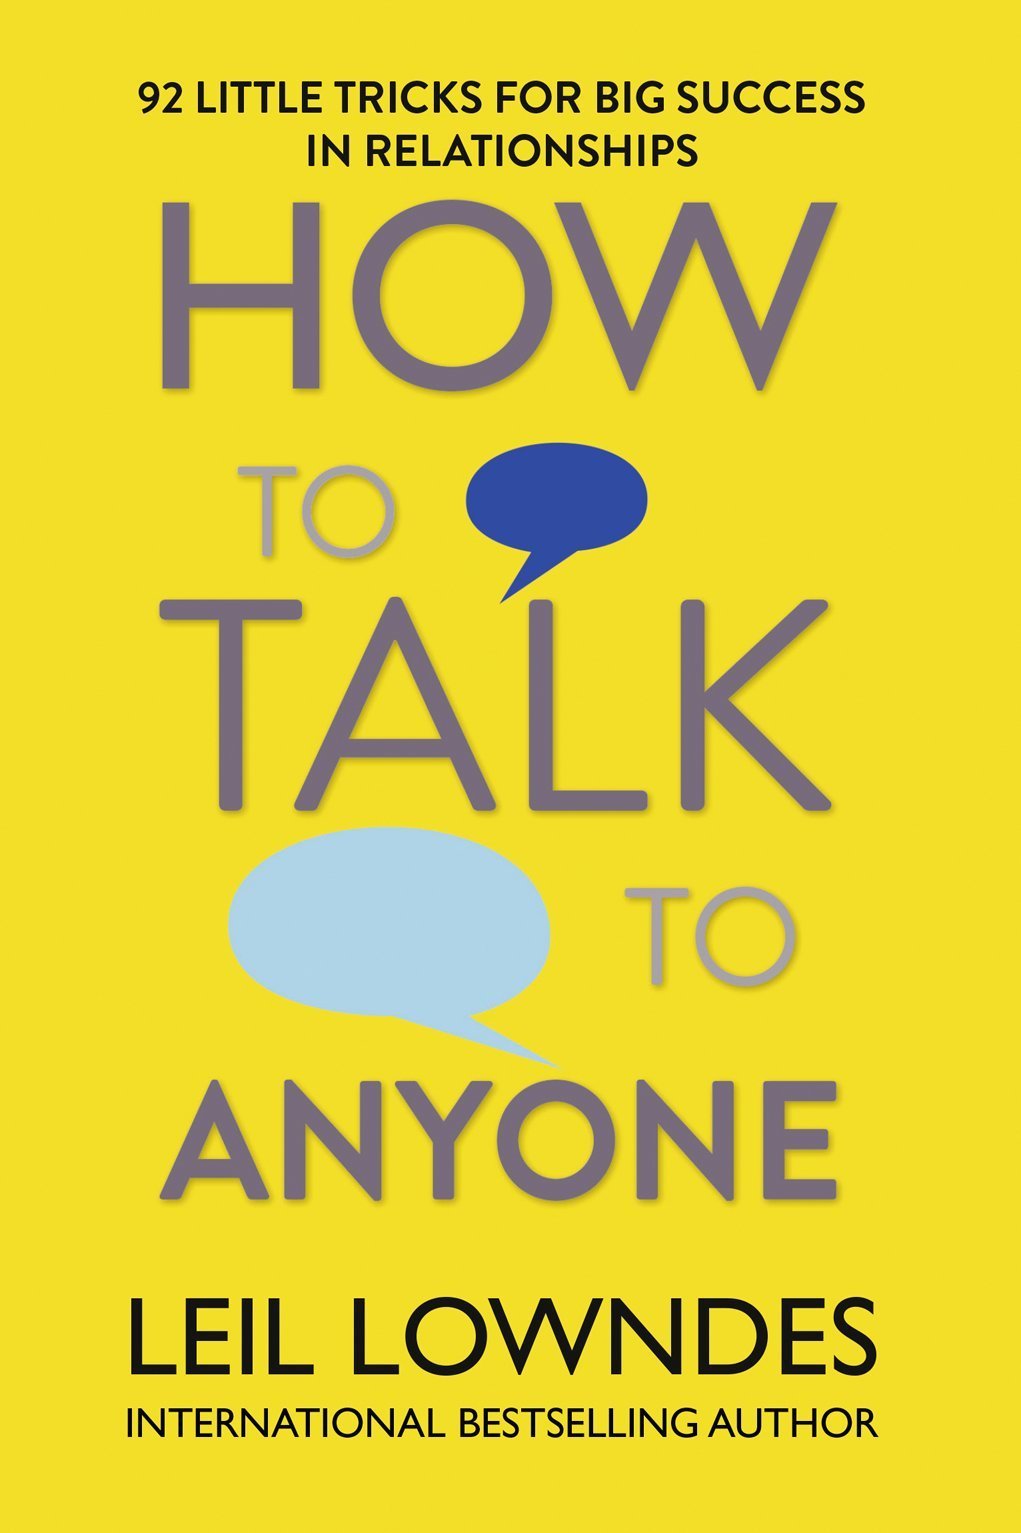 How To Talk To Anyone PDF